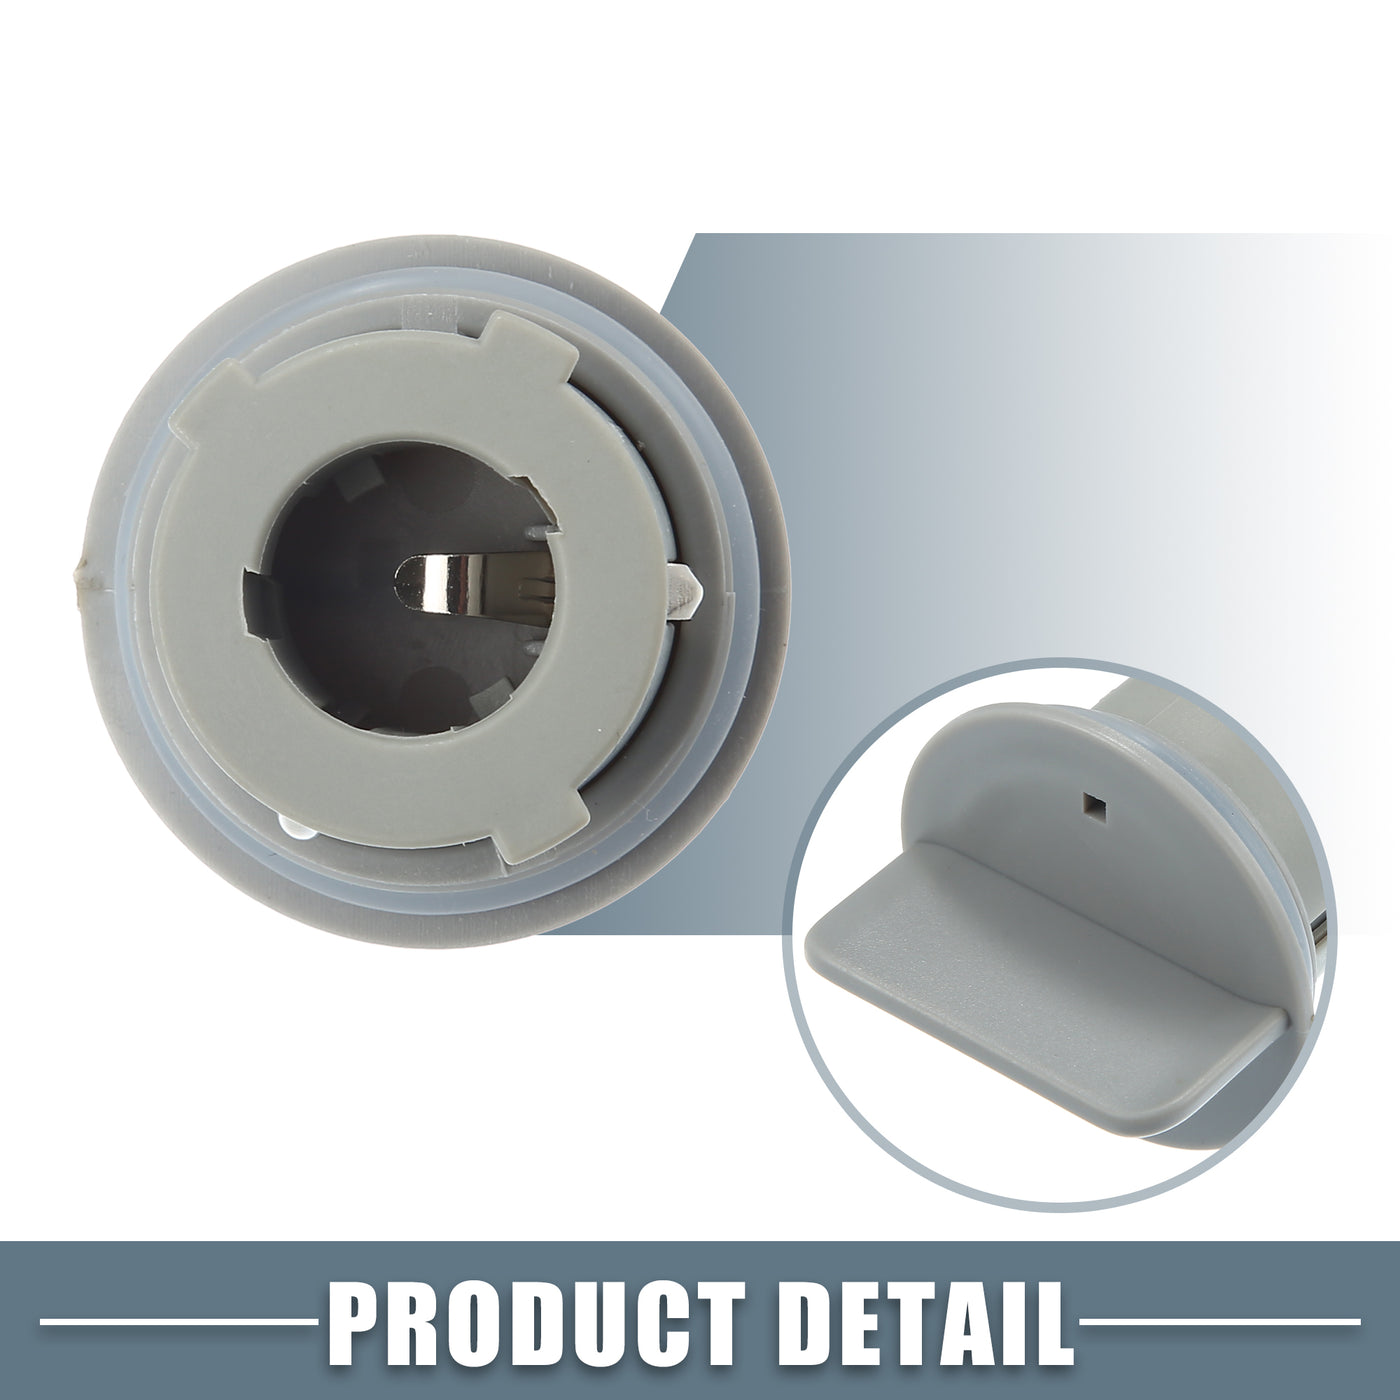 A ABSOPRO Side Indicator Turn Signal Light Bulb Socket Holder 63117159570 for BMW 325i 325xi 328i 330i 330xi 335i E46 E90 2006-2008